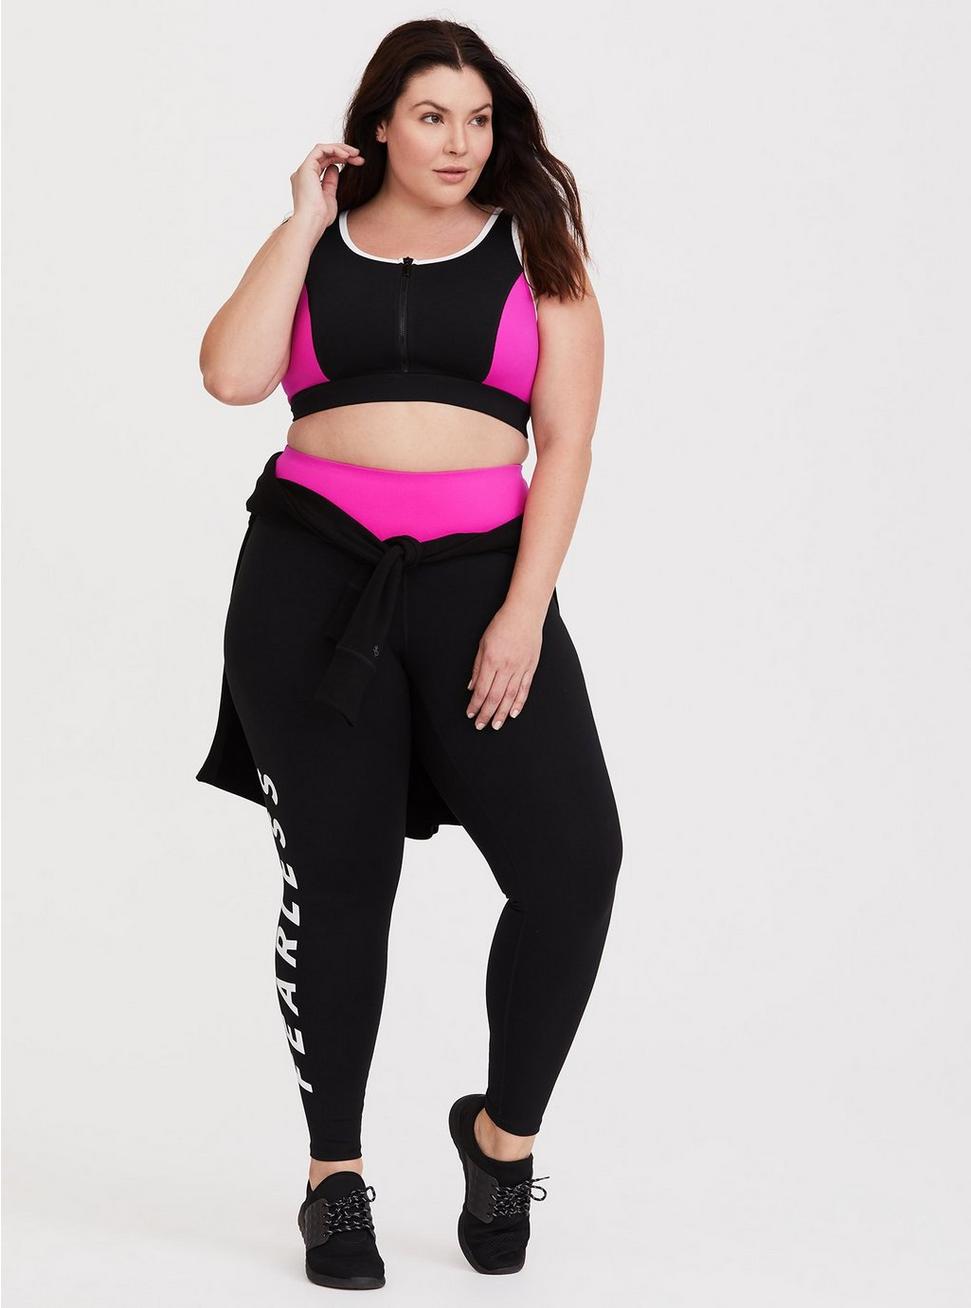 Plus Size - Black & Pink Front Zip Sports Bra - Torrid